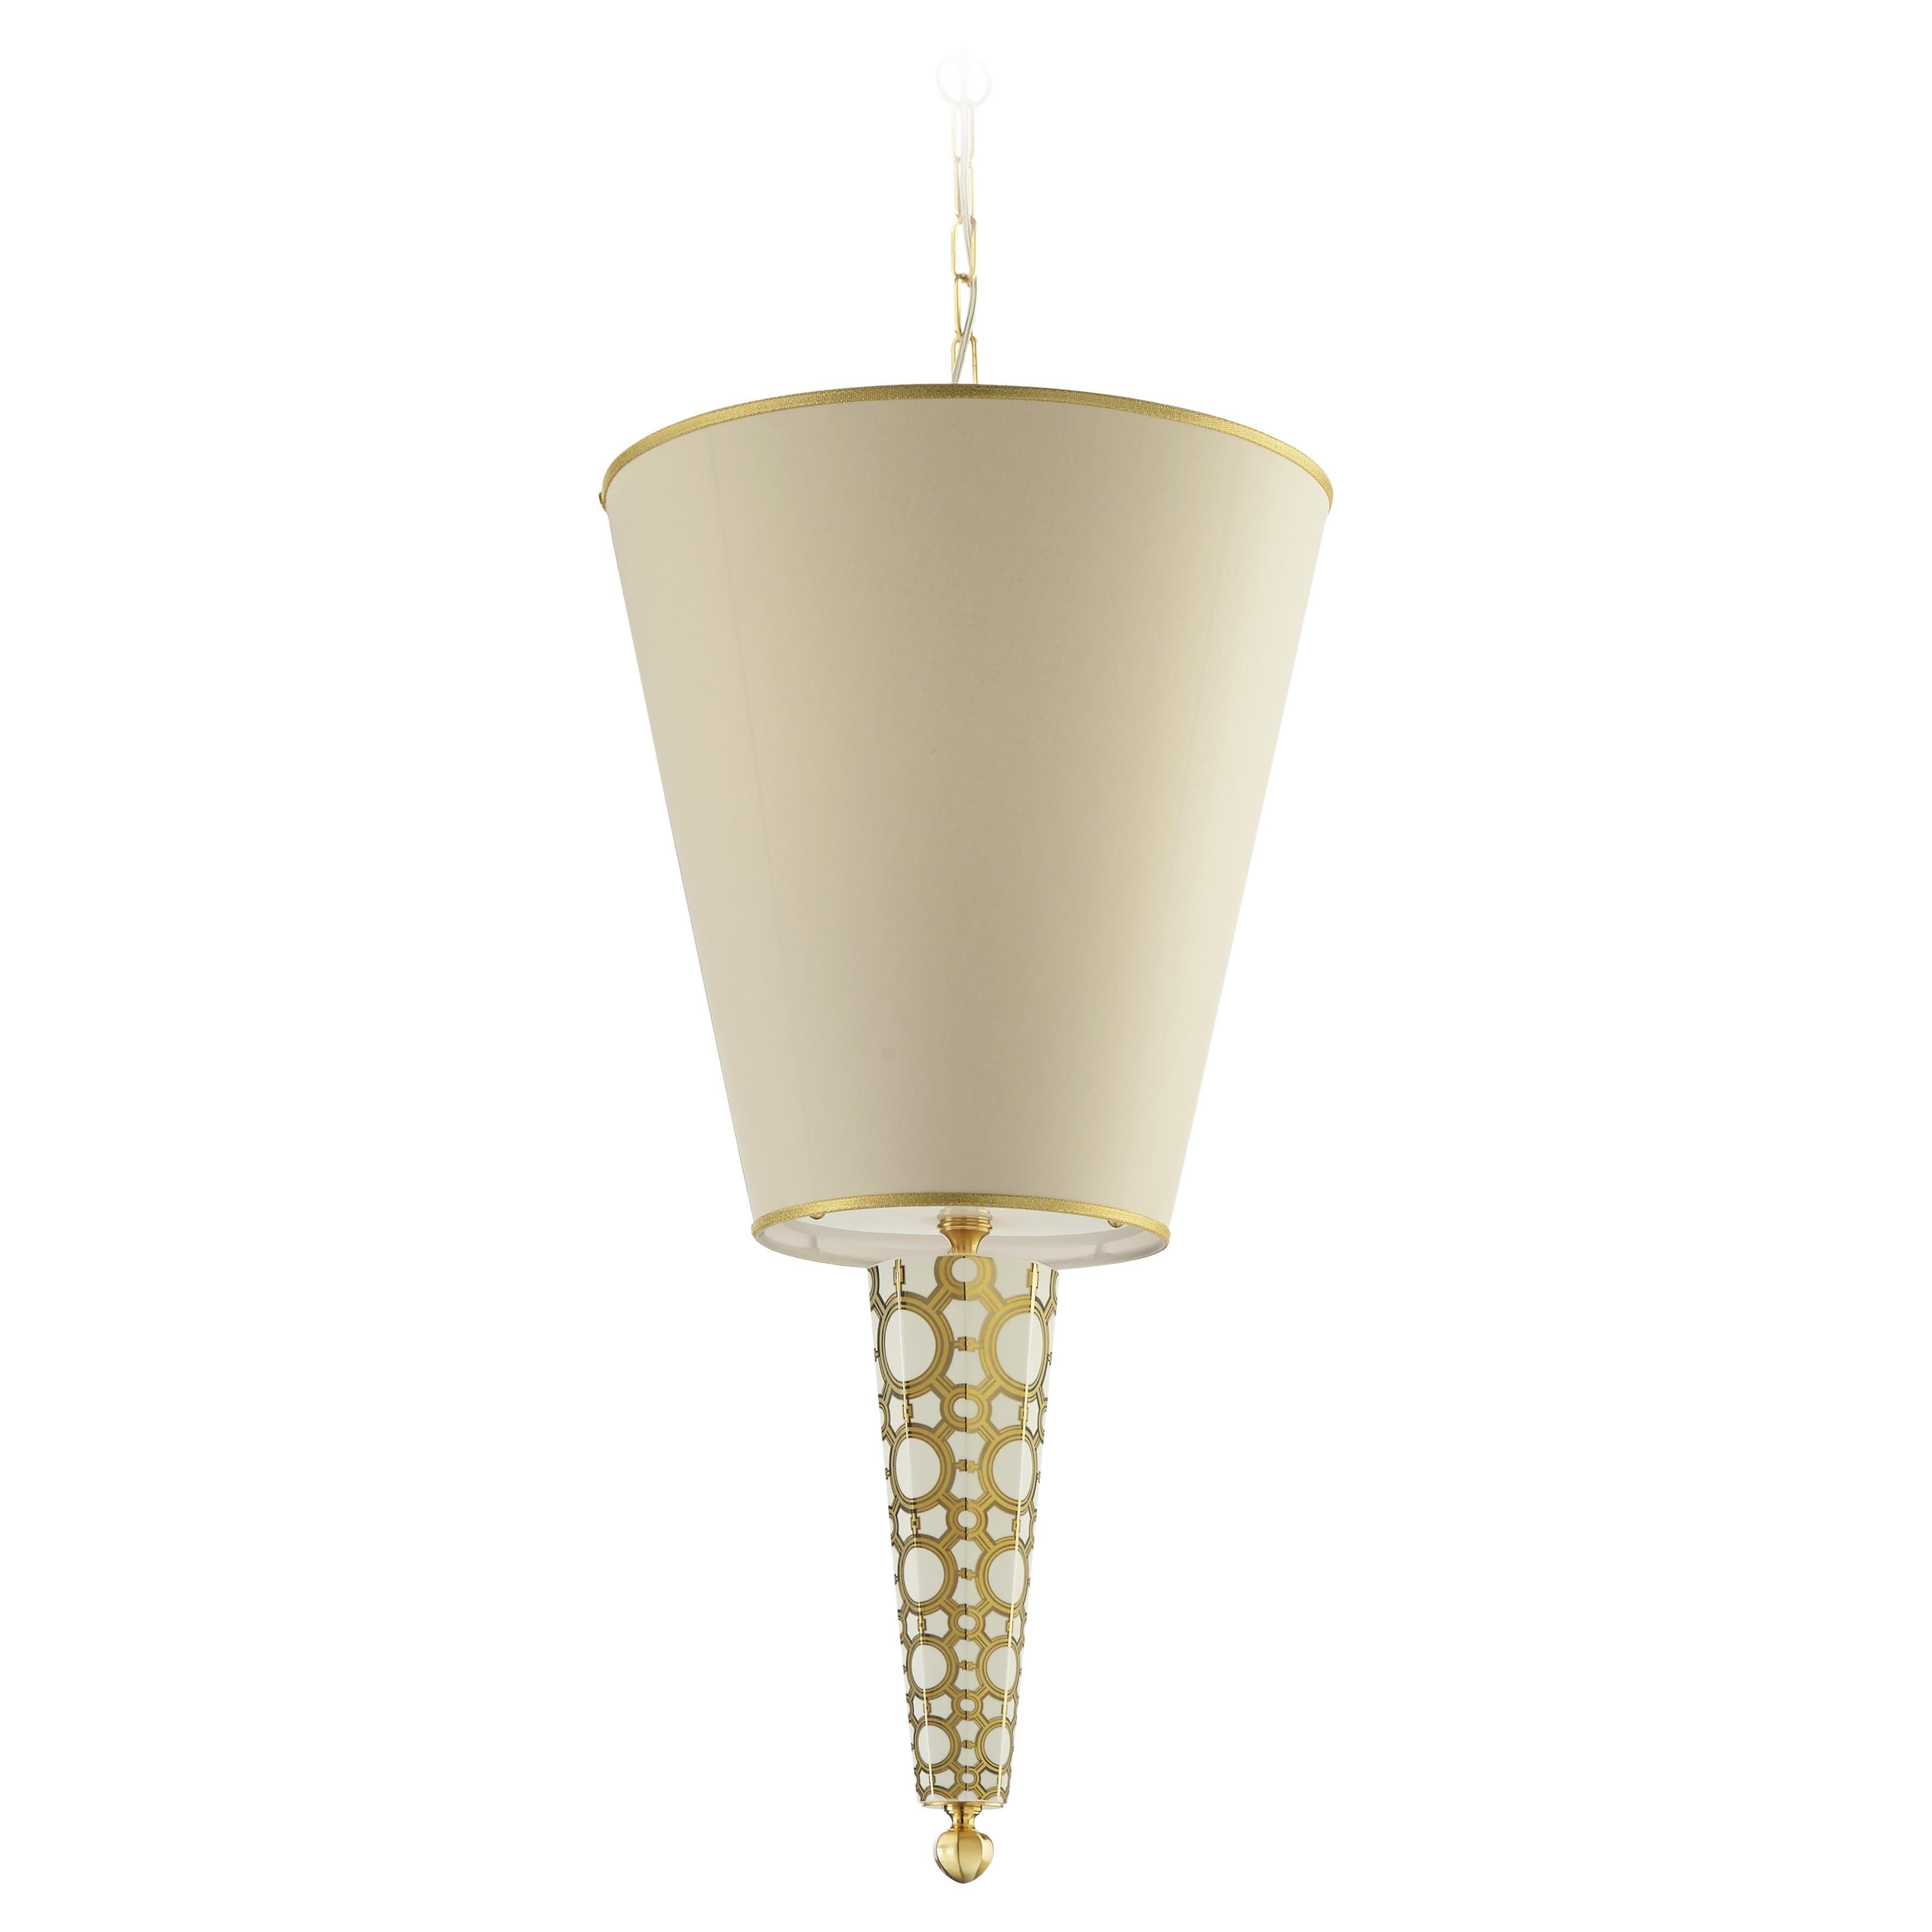 Palazzo Vecchio Collection, Suspension Lamp, Gold and Platinum Decorations 